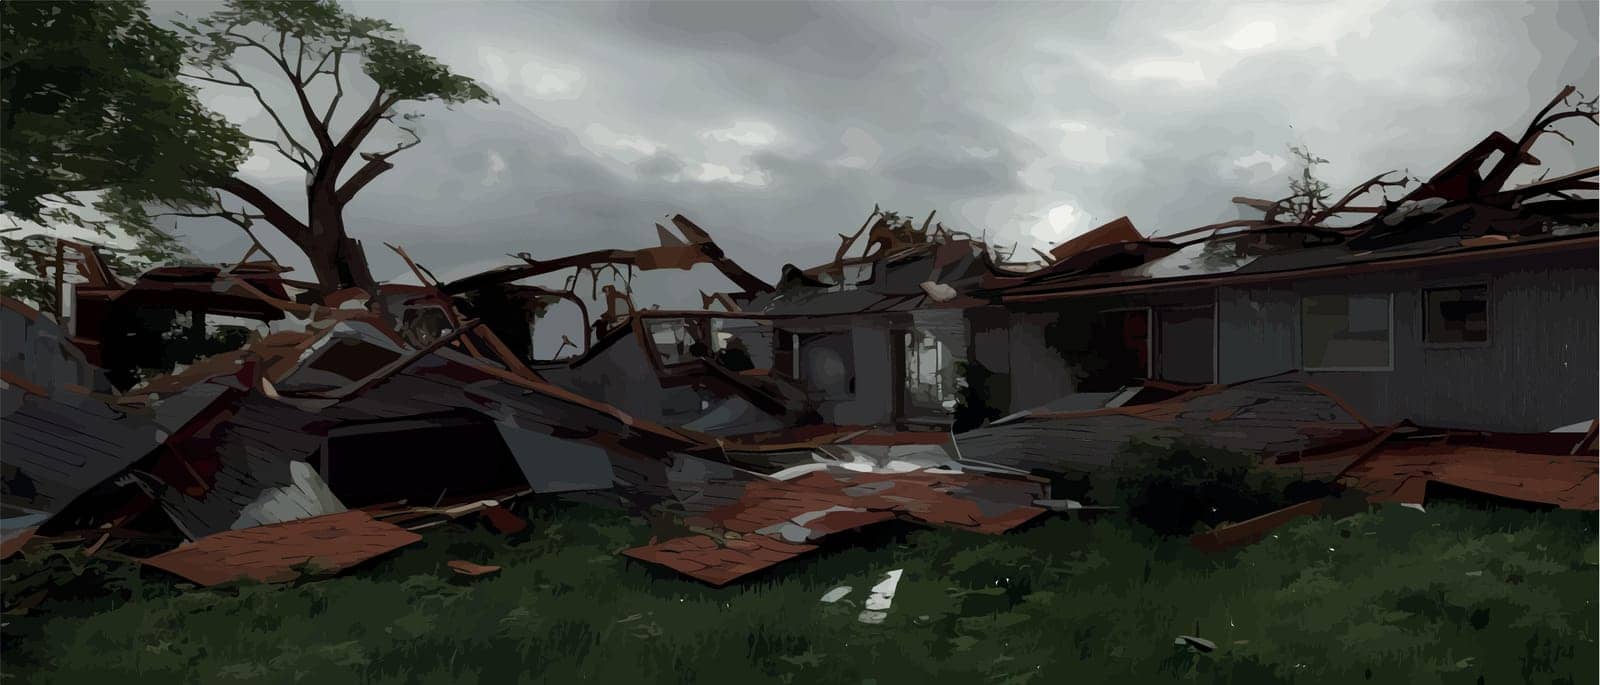 Tornadoes destroy buildings. Illustrations of natural disasters. Destructive natural phenomena. Vector illustration